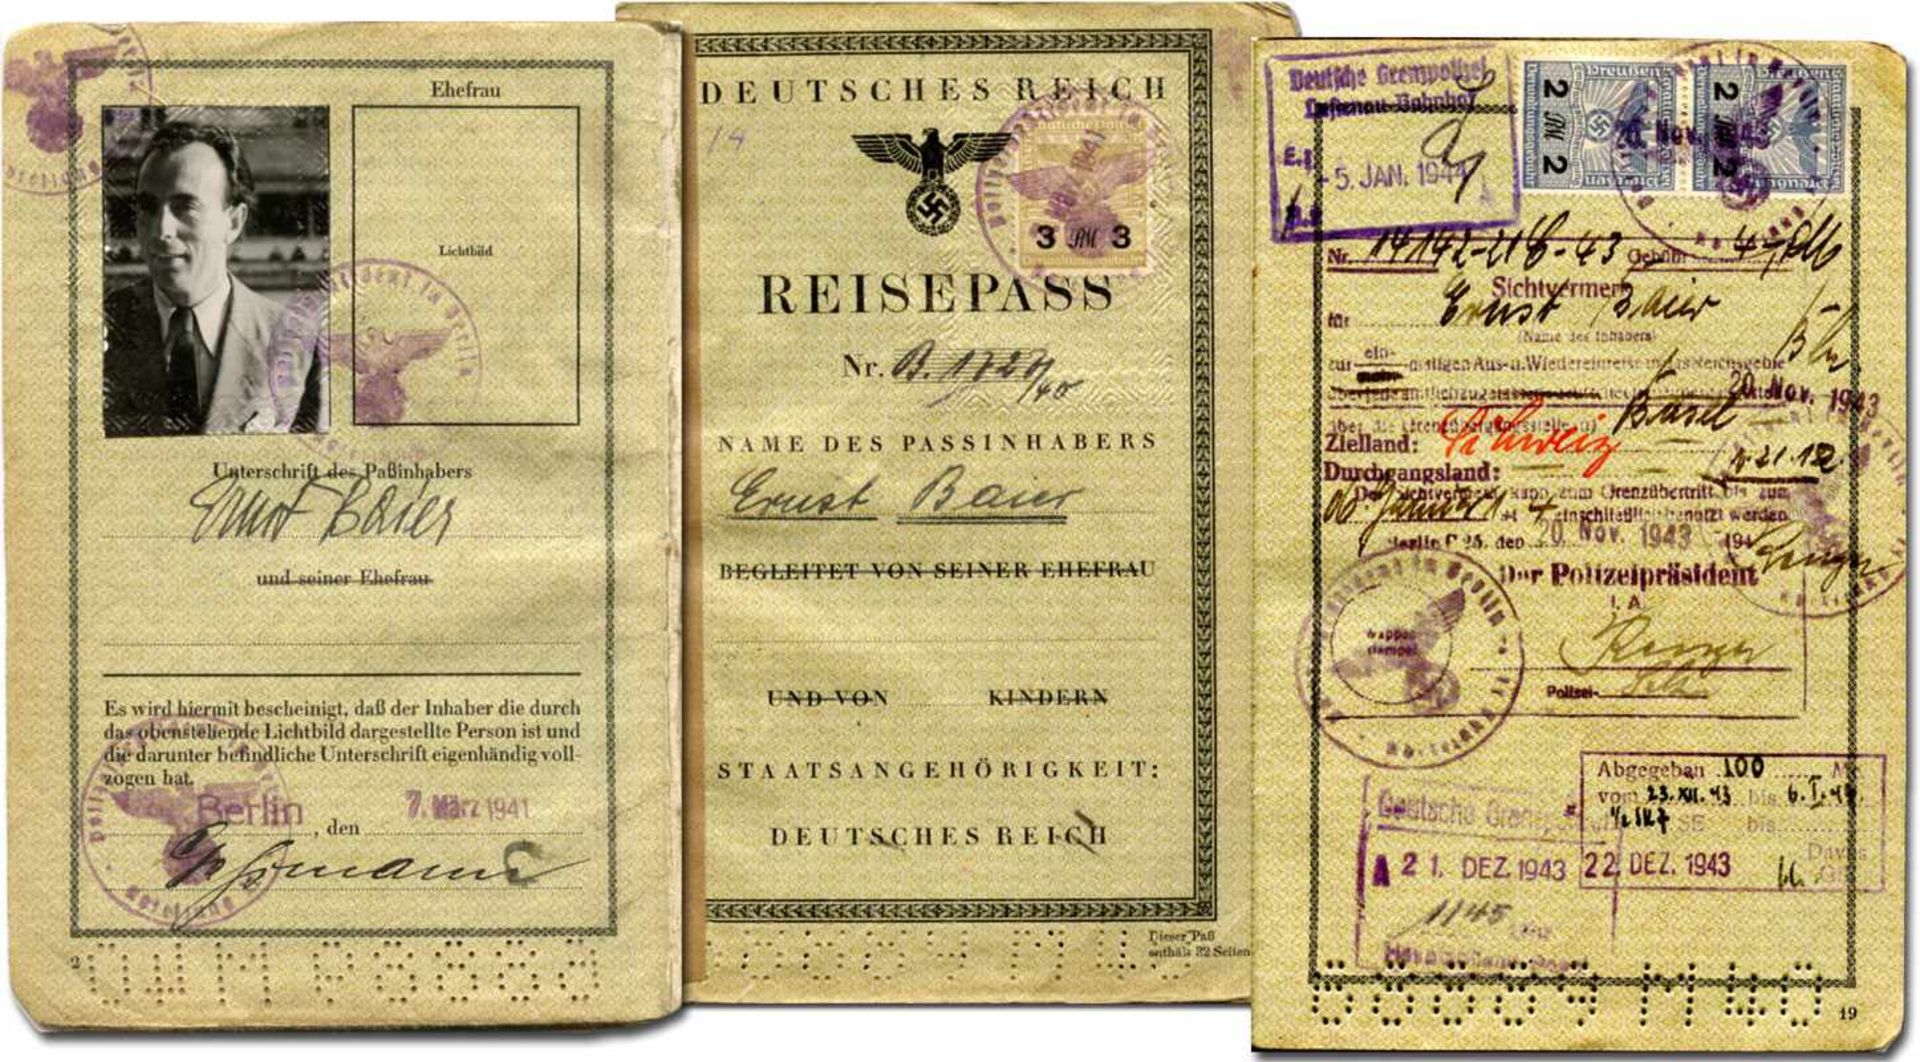 Olympic Games 1936 Gold medal Winner ID-Card - Ãbersetzen! Baier,Ernst - Original Reisepass des "